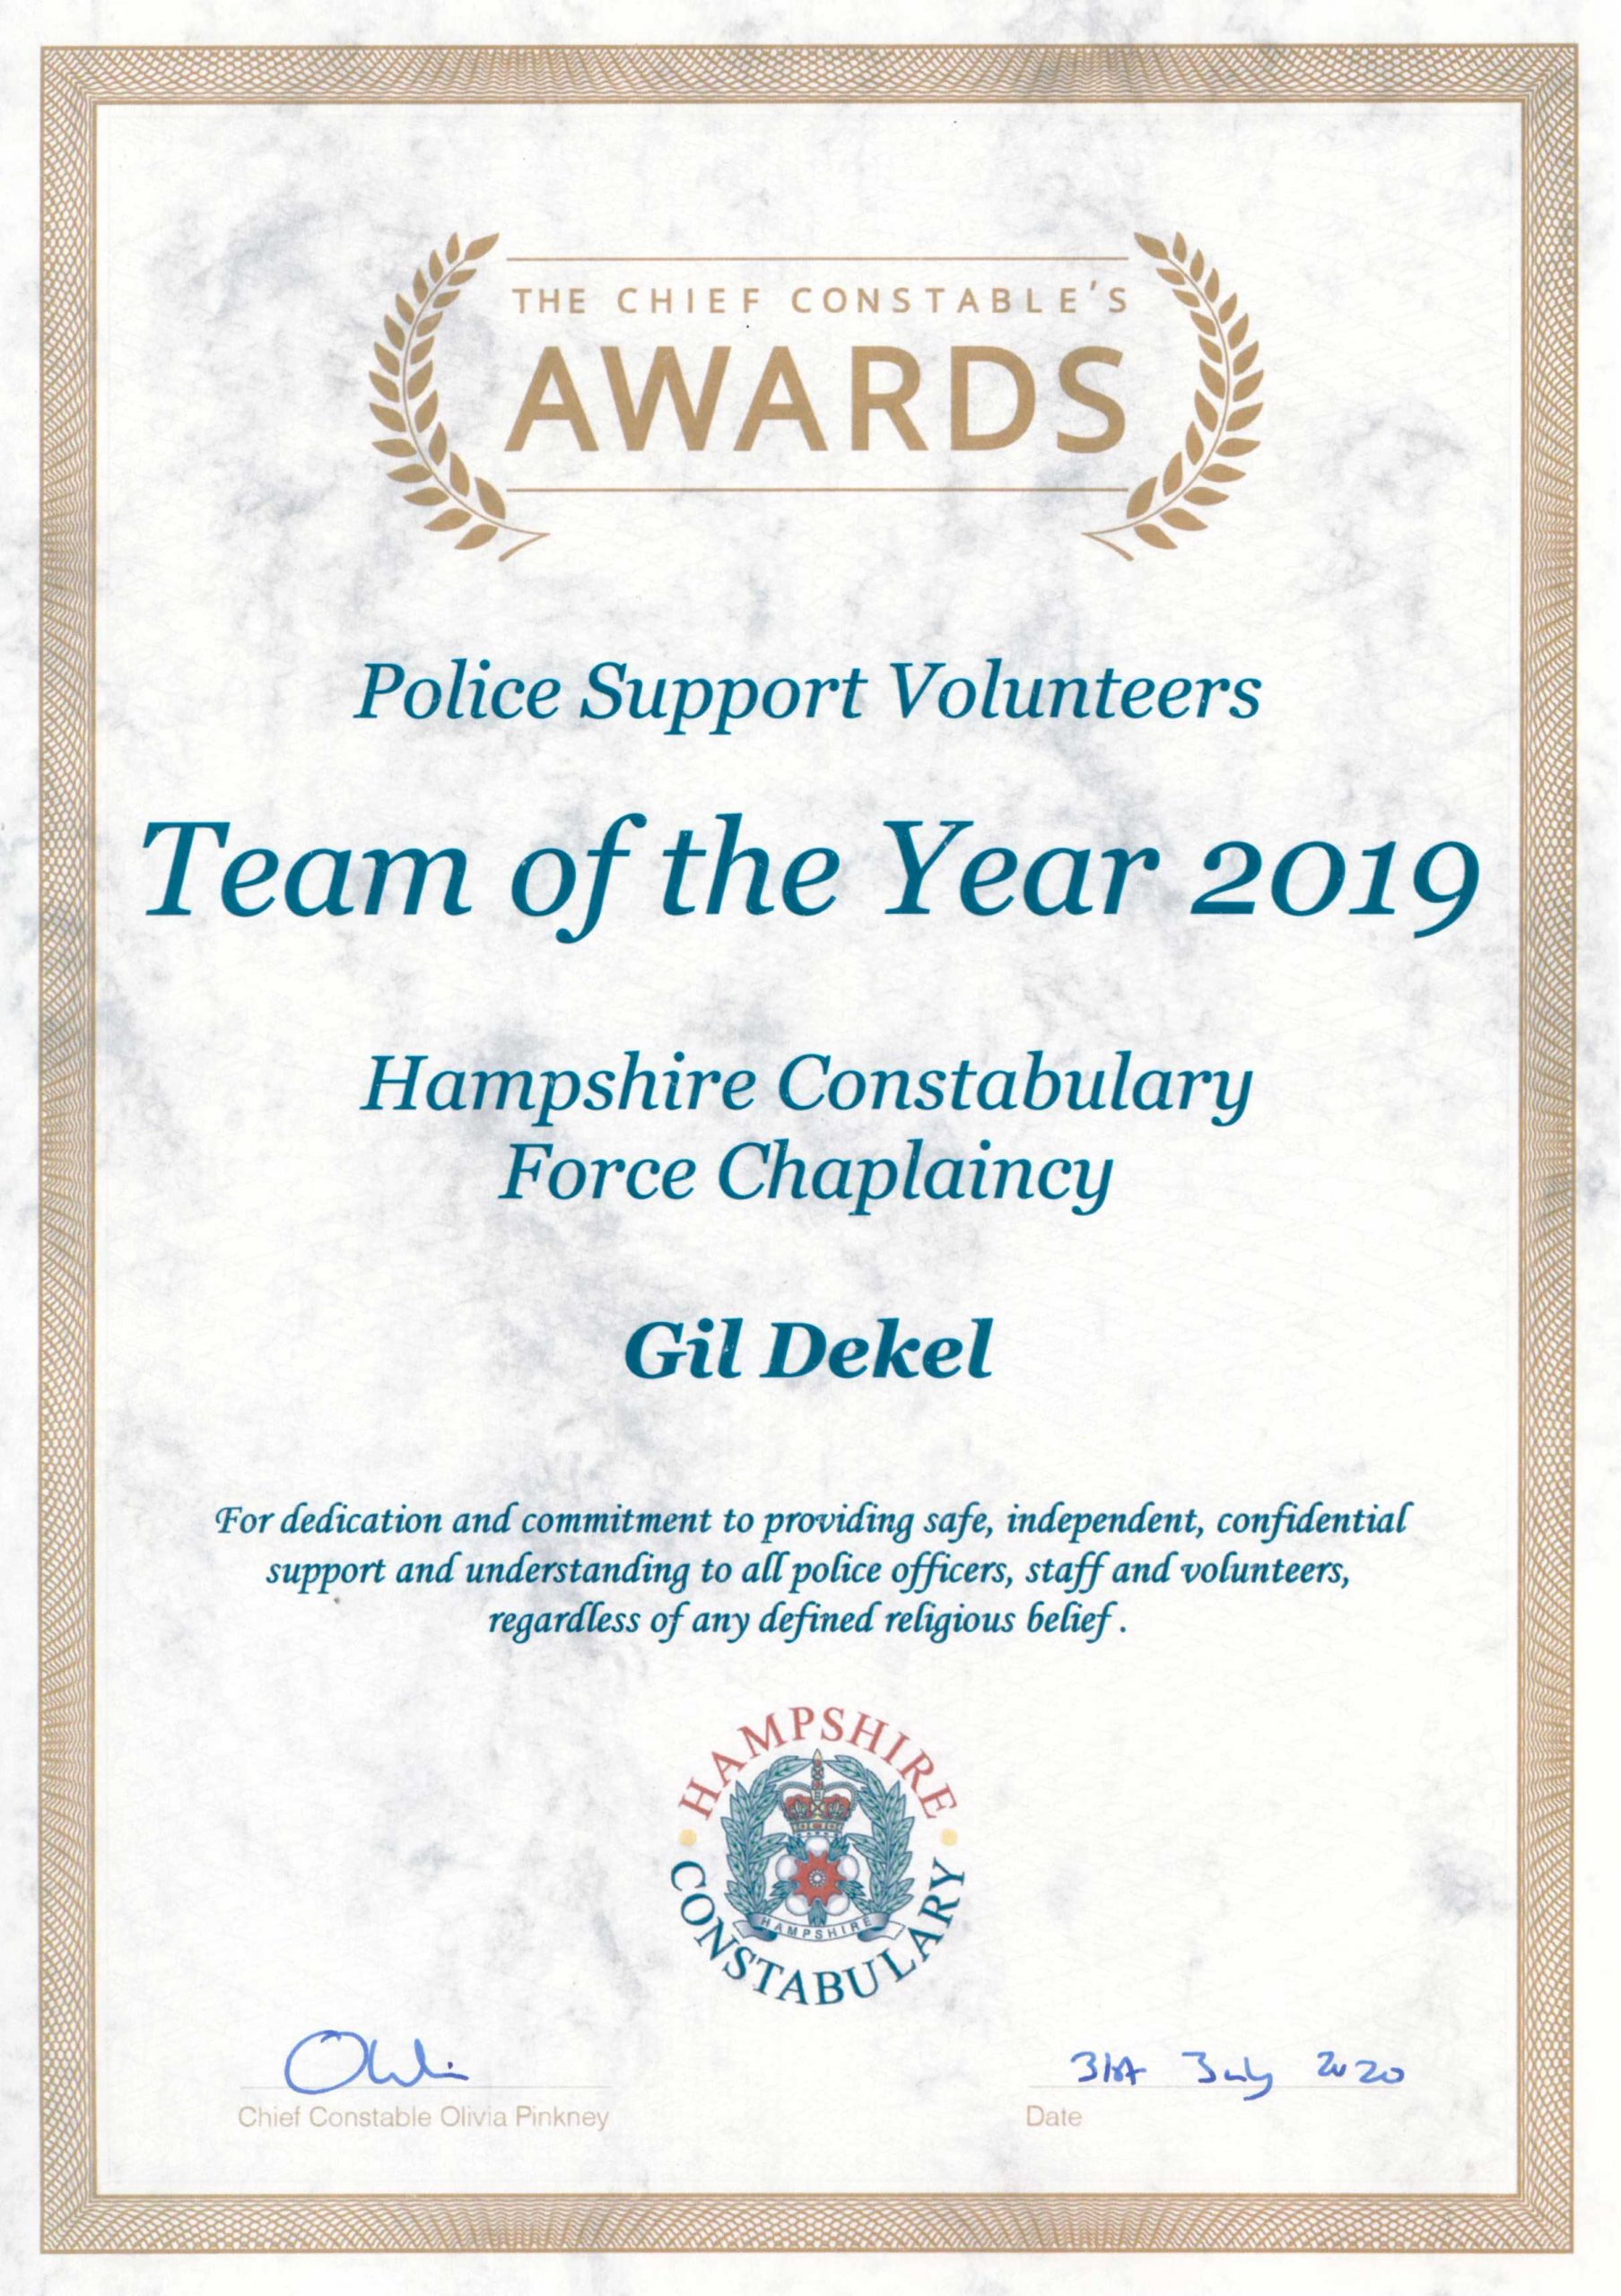 Award: Gil Dekel Police Team award 2019